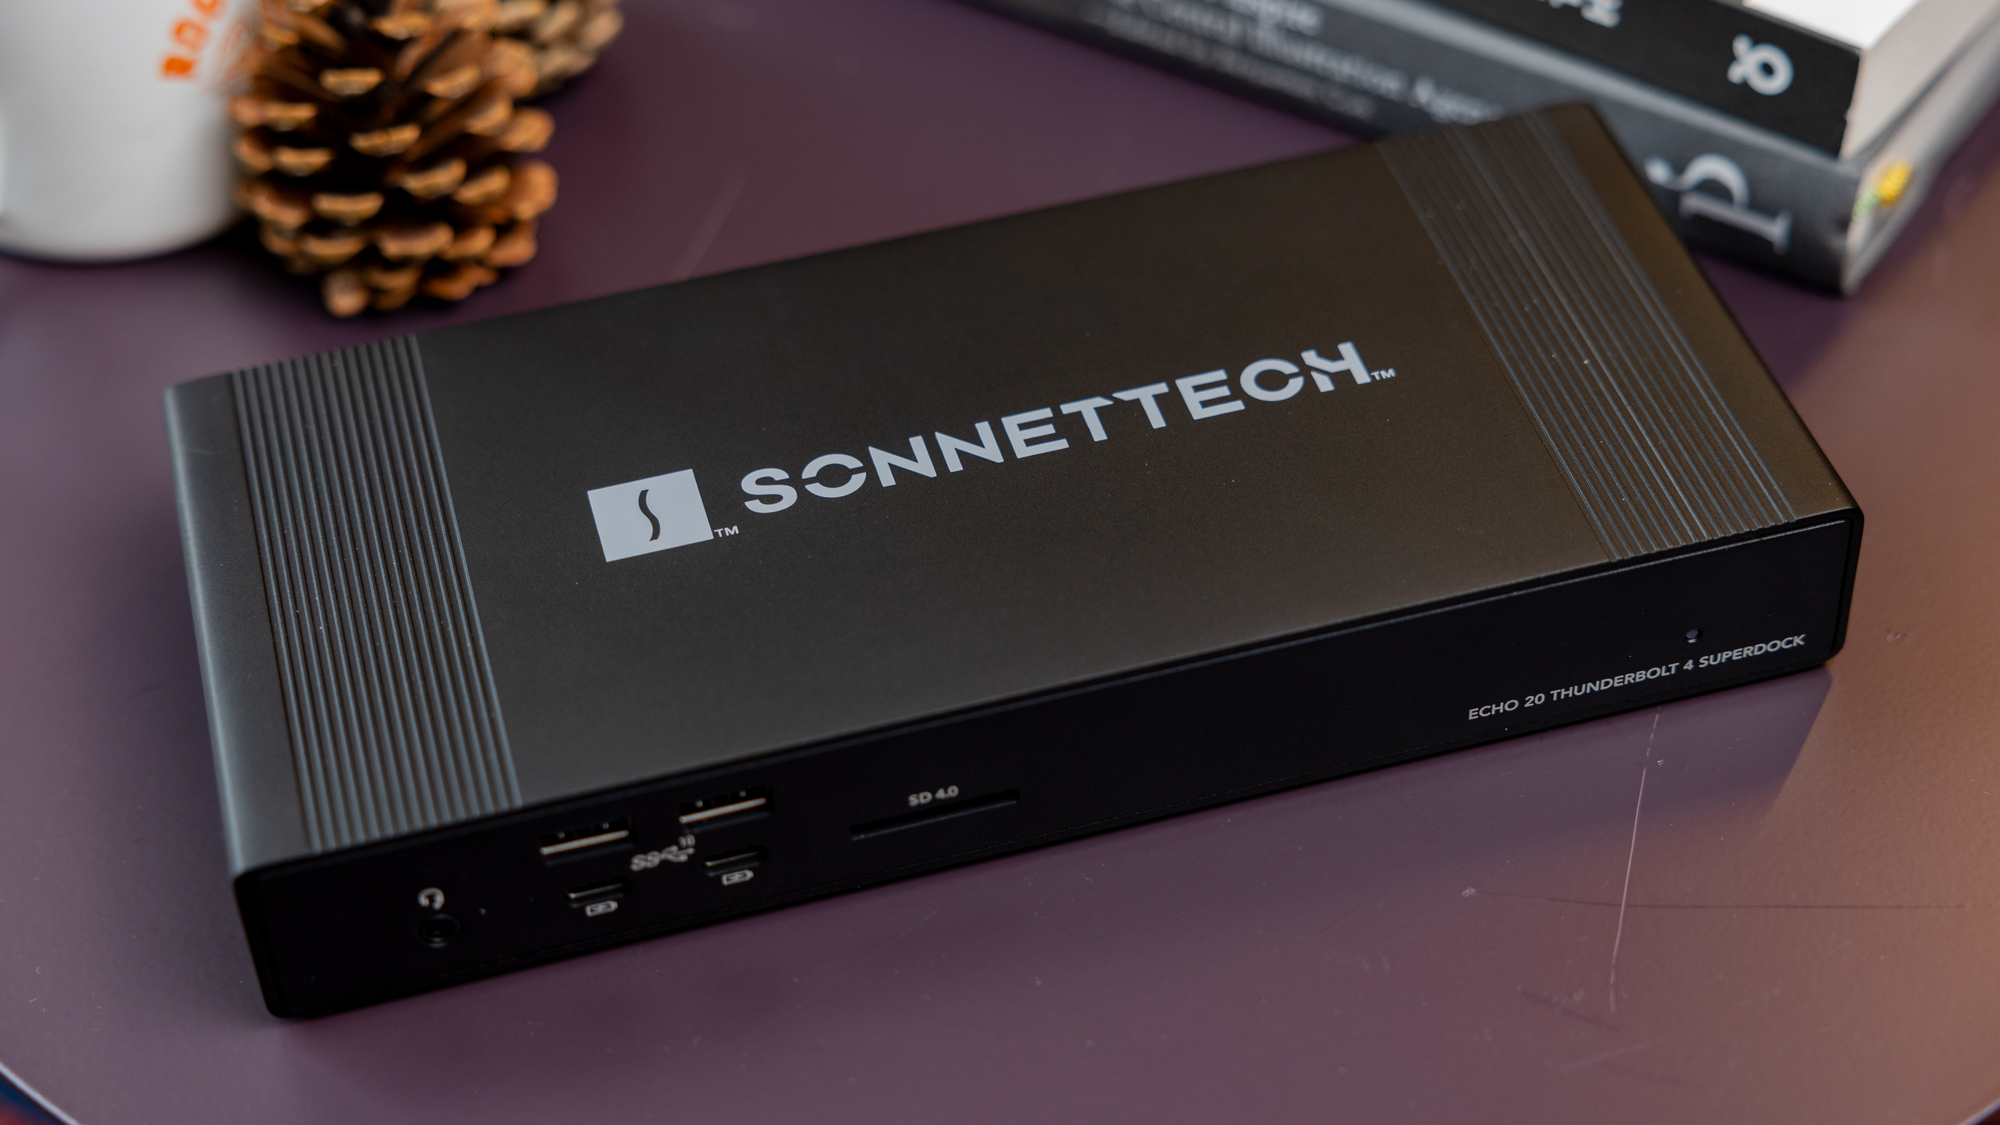 Sonnet Echo 20 Thunderbolt 4 SuperDock - Best HDMI Thunderbolt 4 dock